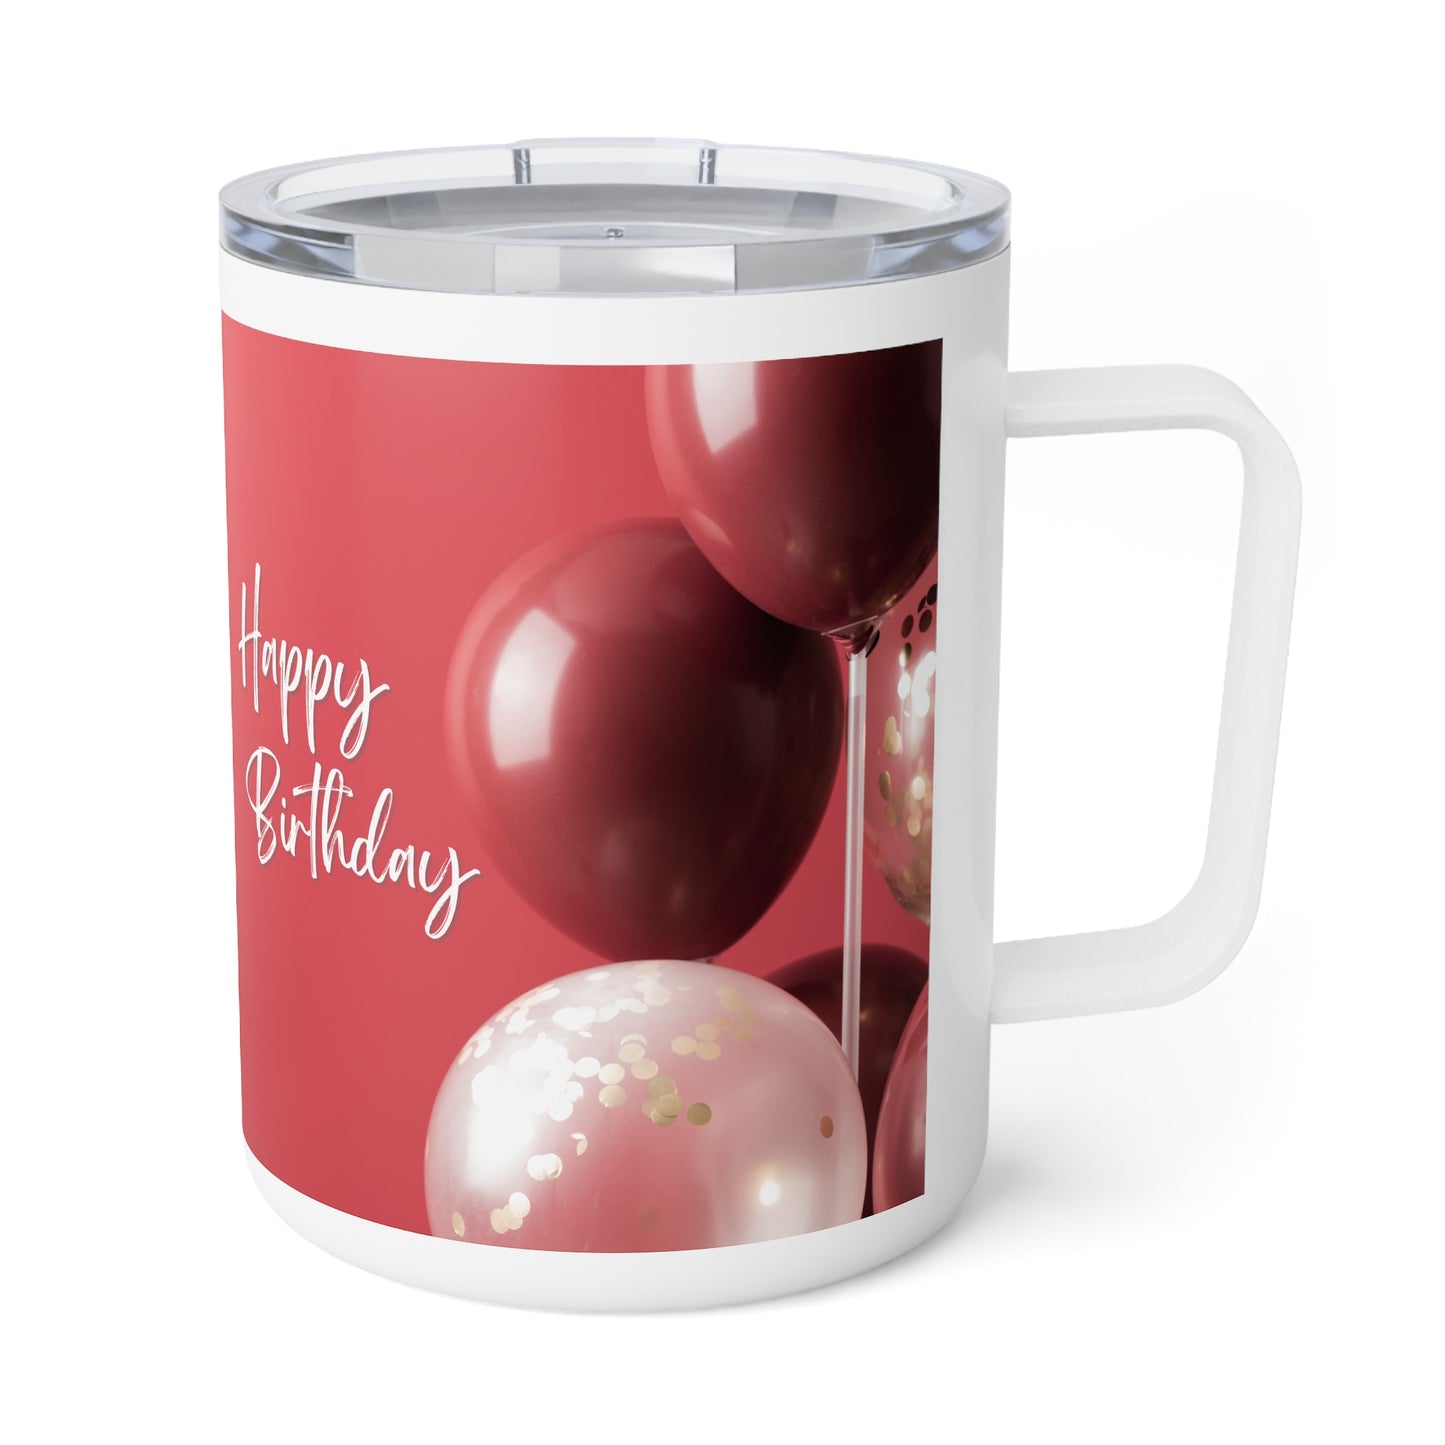 Happy Birthday Insulated Coffee Mugs 10oz, Pink,